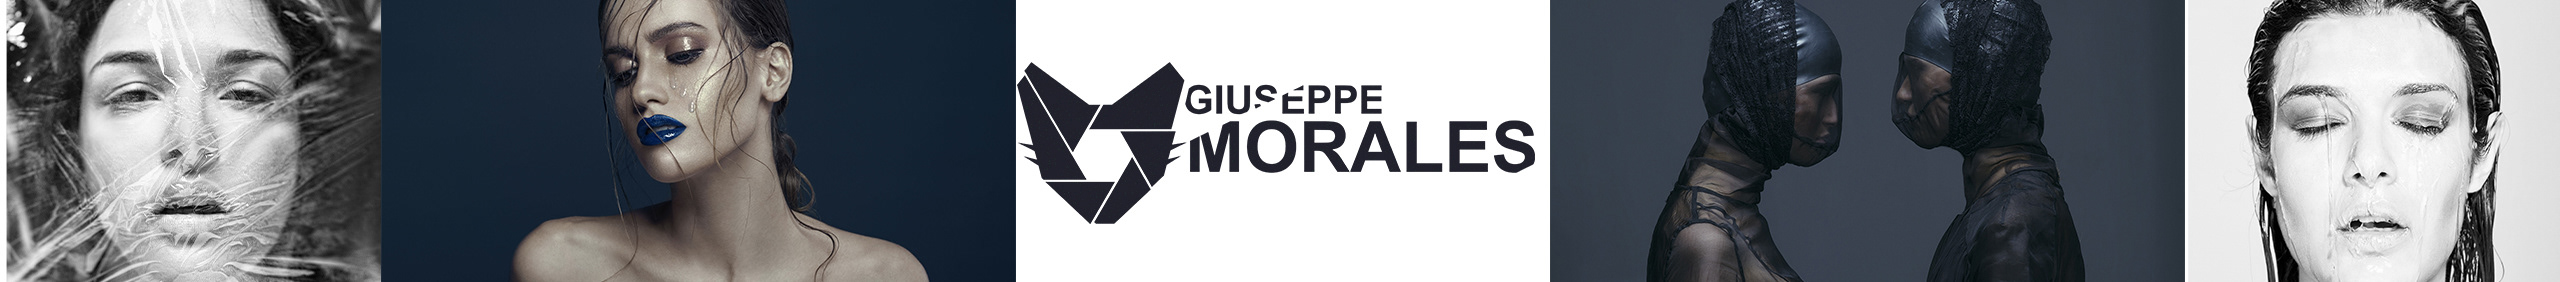 Giuseppe Morales profil başlığı